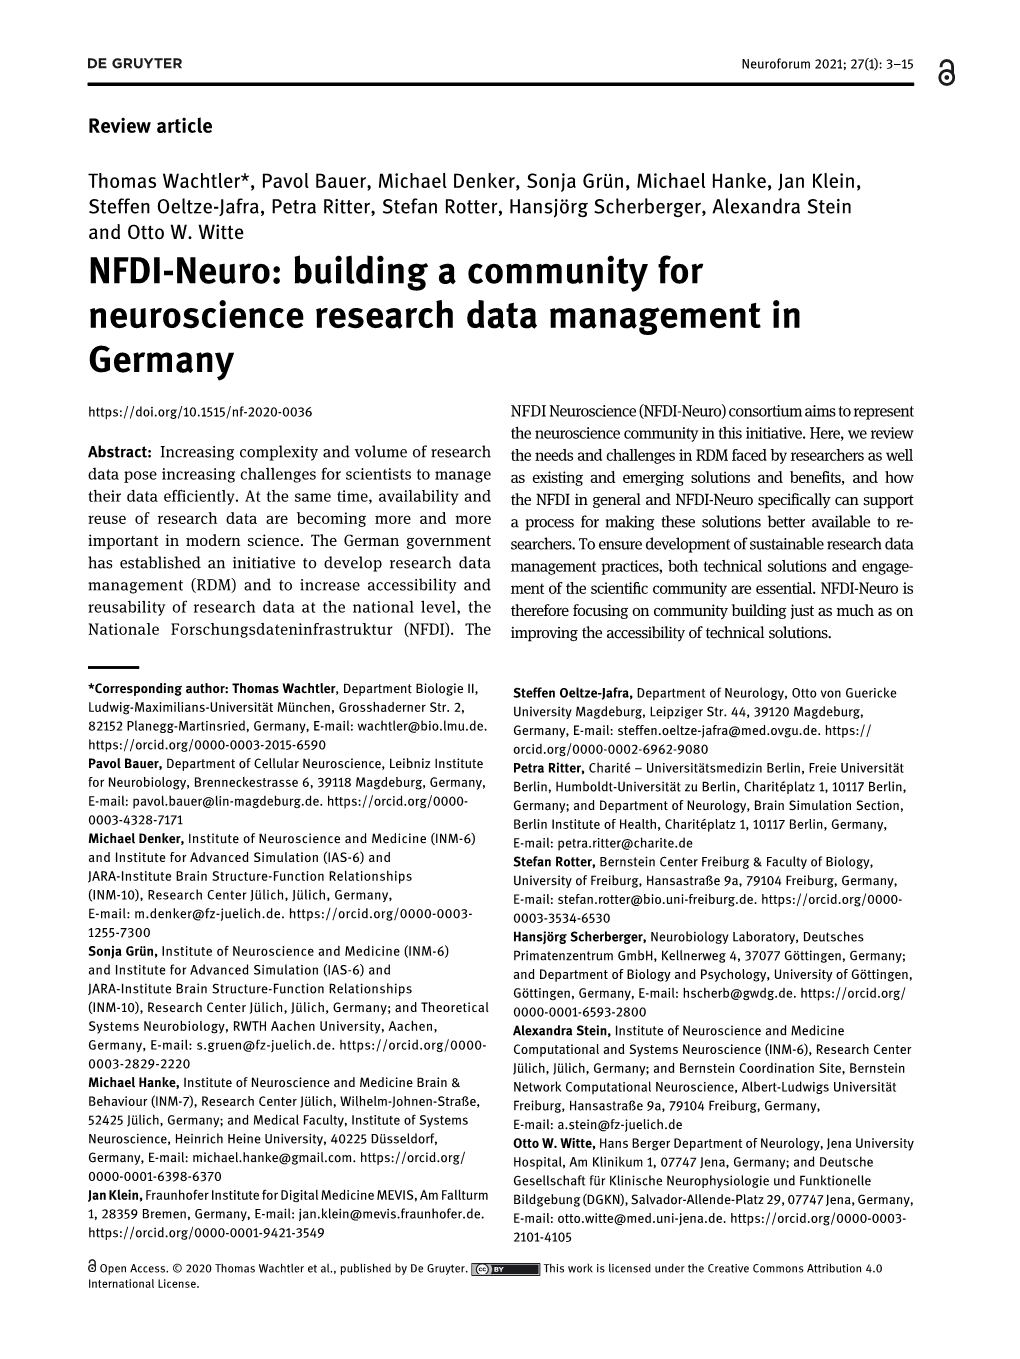 NFDI-Neuro: Building a Community for Neuroscience Research Data